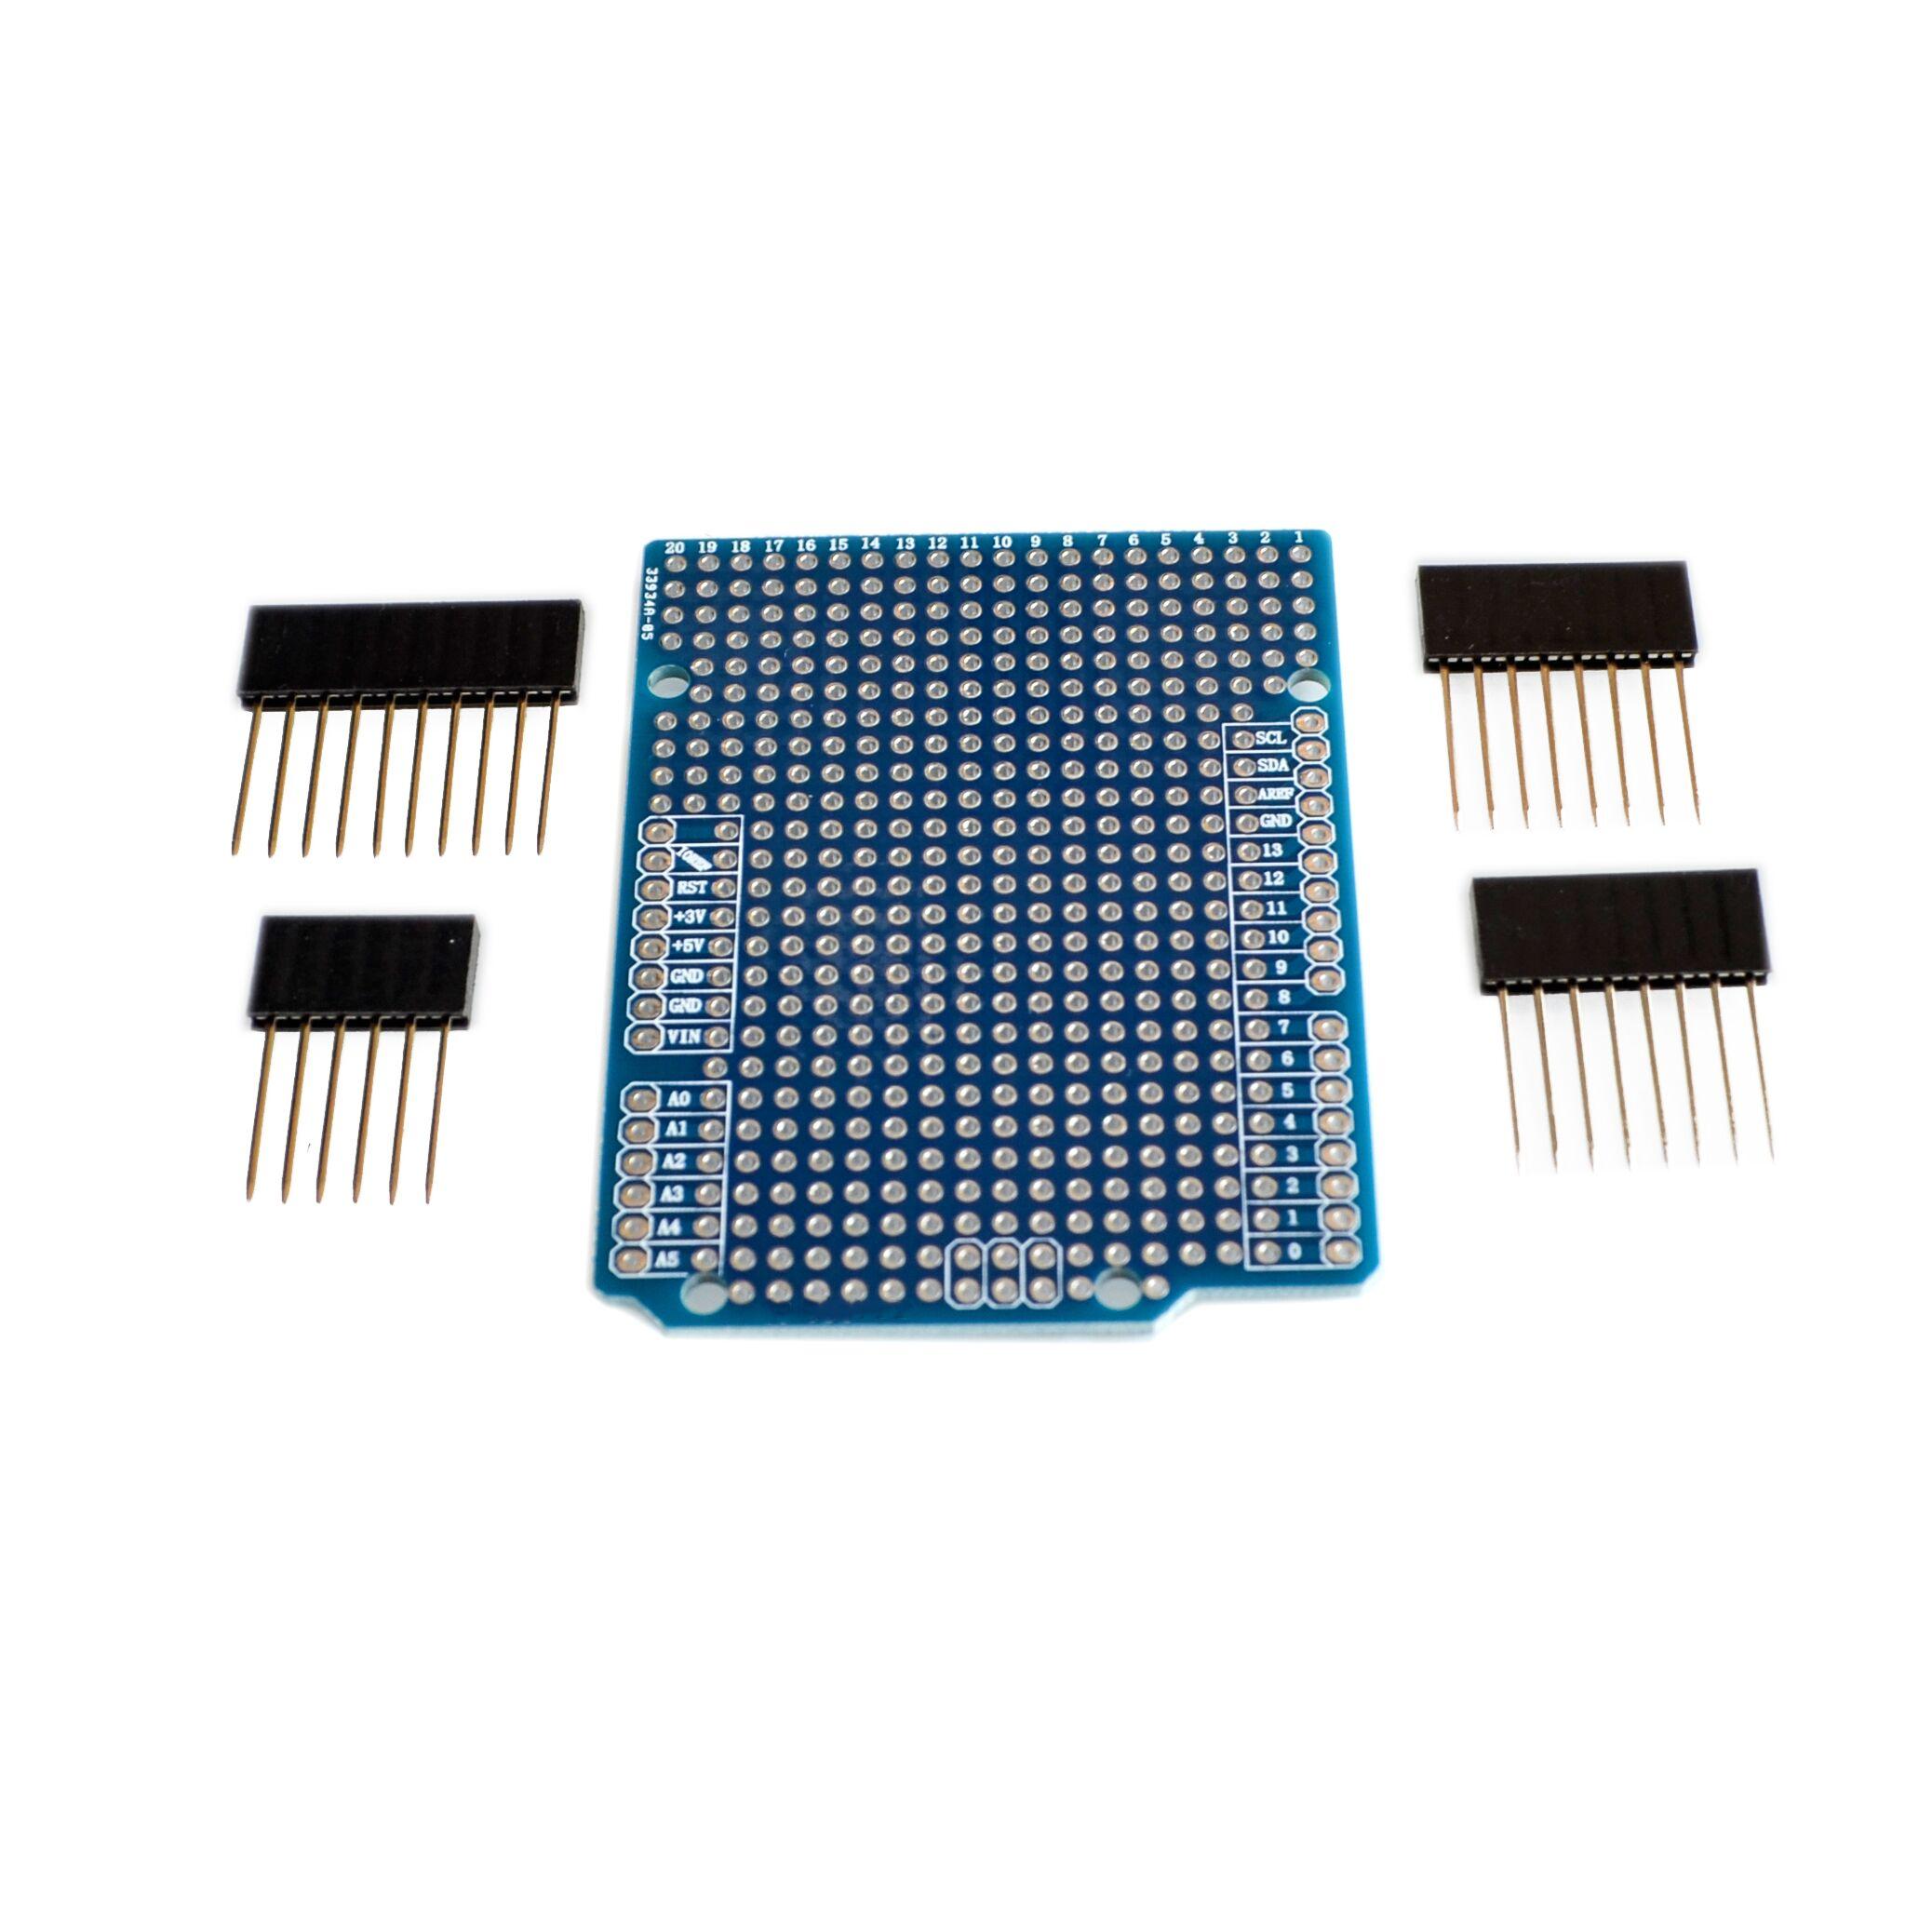 10PCS/LOT Prototype PCB Expansion Board For Arduino ATMEGA328P UNO R3 Shield FR-4 Fiber PCB Breadboard 2mm 2.54mm Pitch